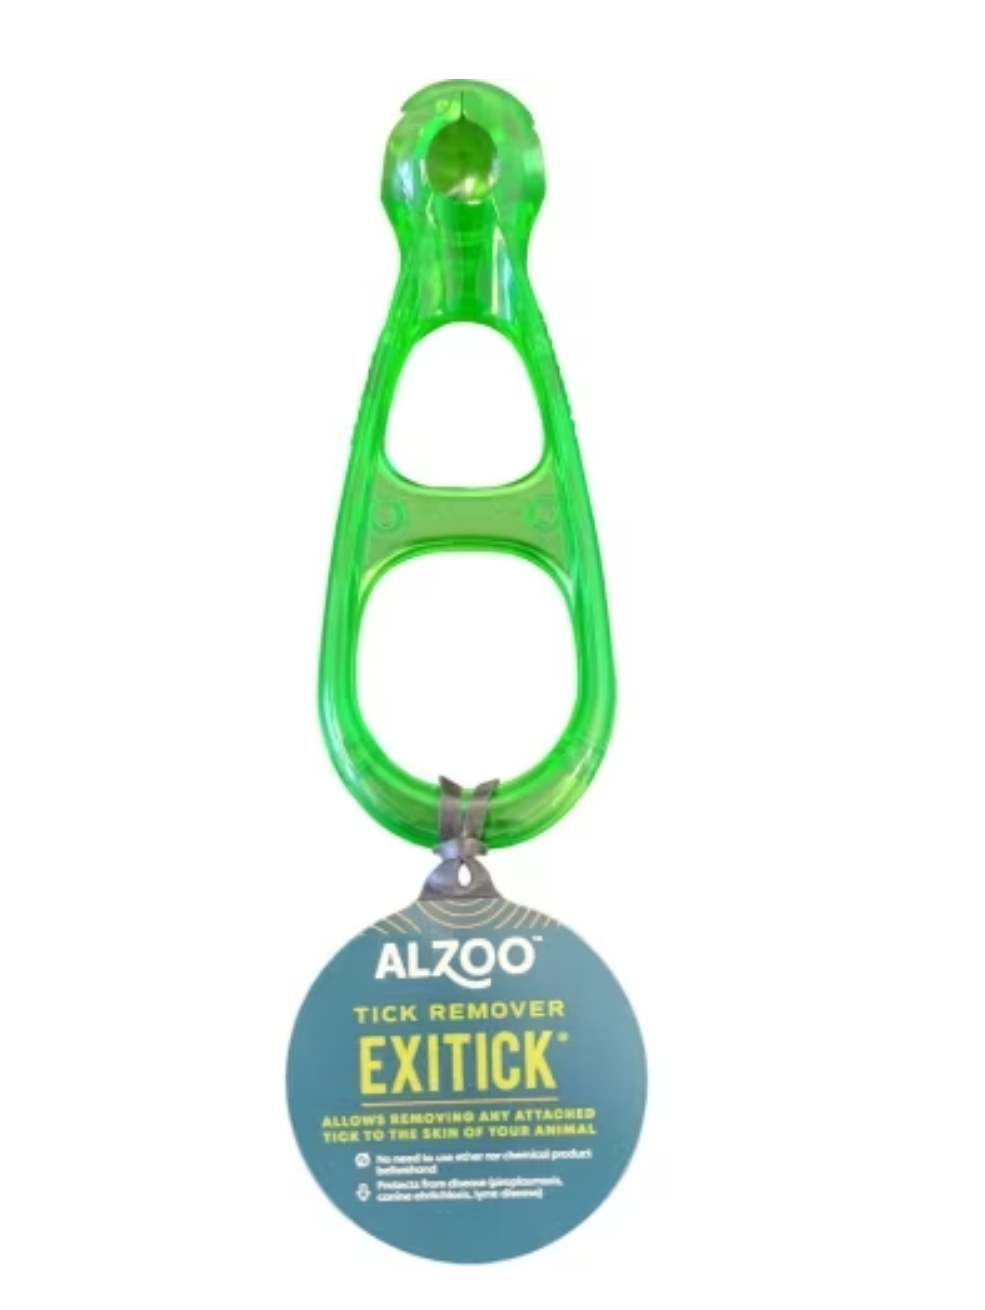 Alzoo Exitick Tick Remover